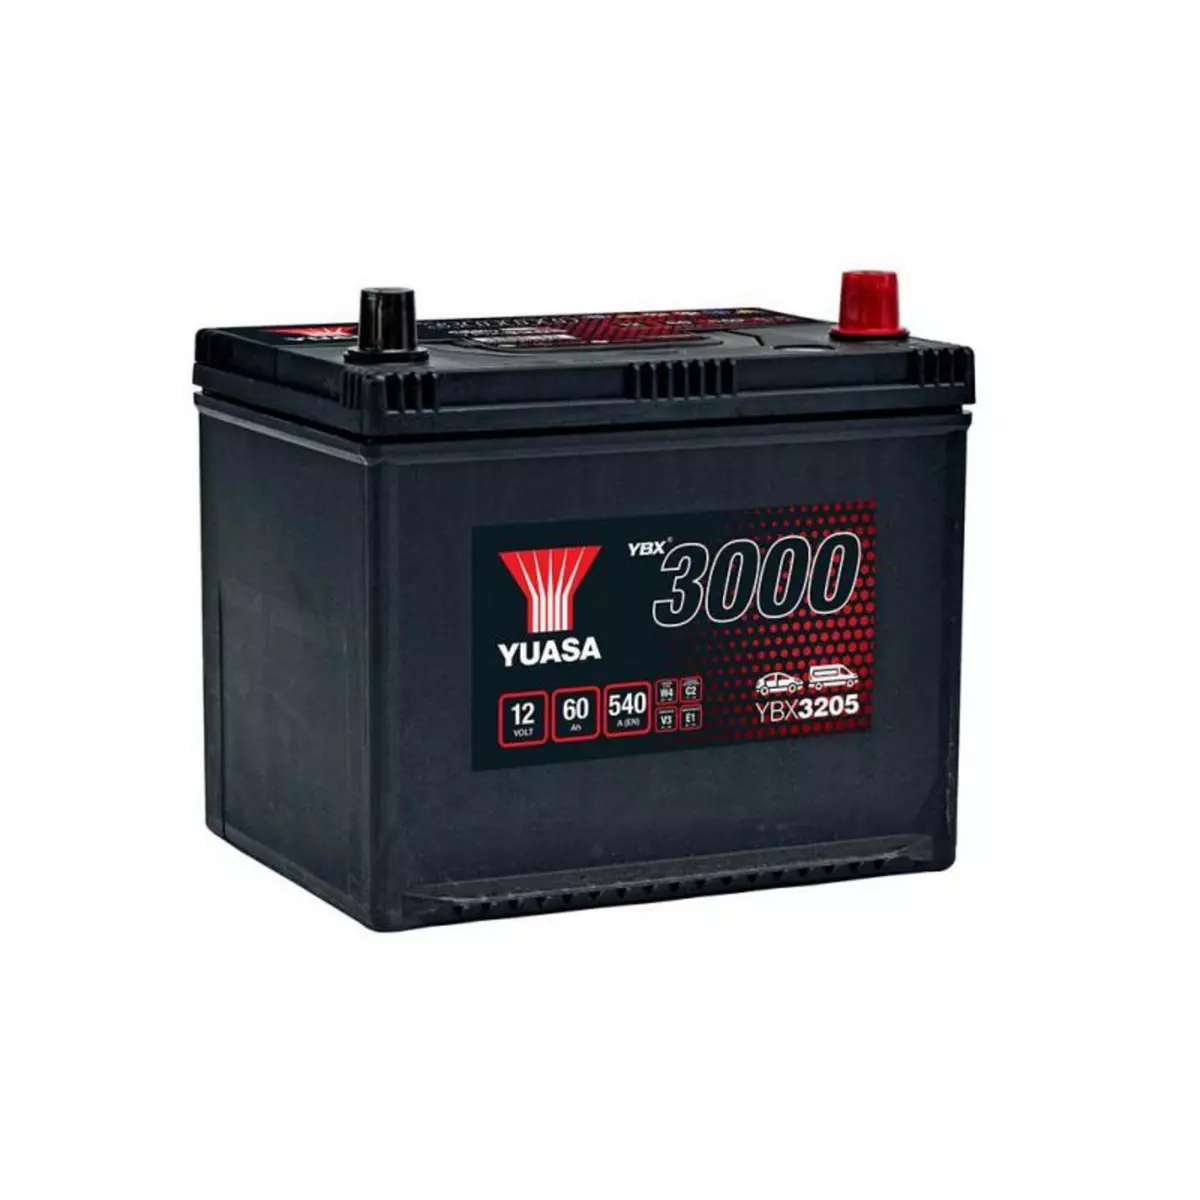 YUASA Batterie Yuasa SMF YBX3205 12V 60ah 540A D23D